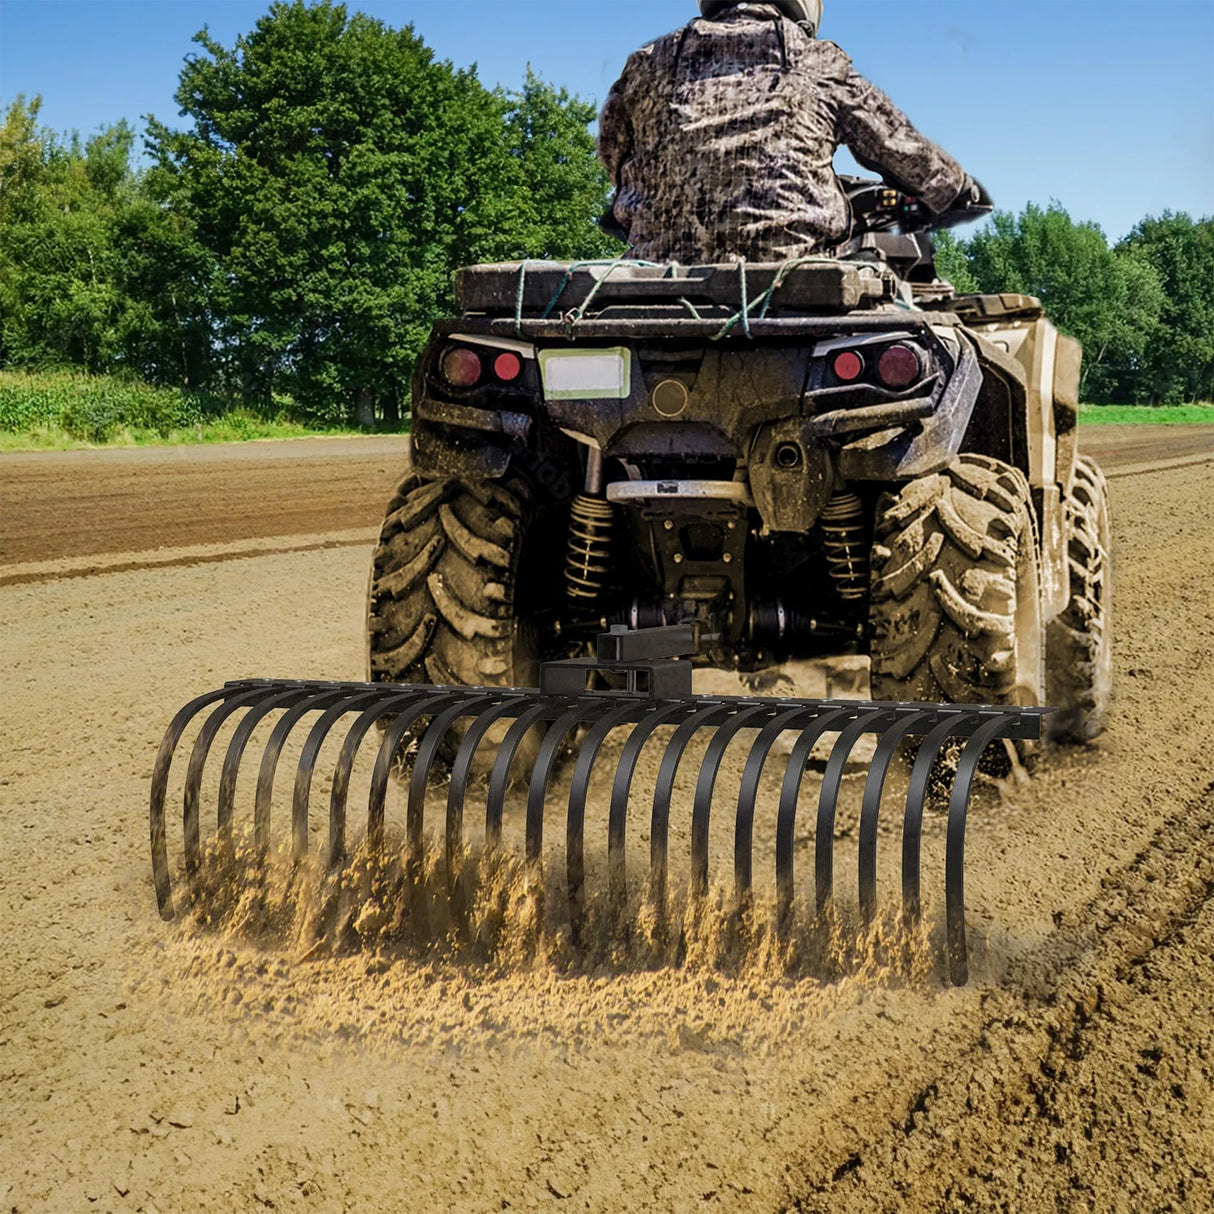 5FT 2" Receiver Tractors Rake 21 Pine Straw Rake Fits for Lawn Tractors or ATV/UTV